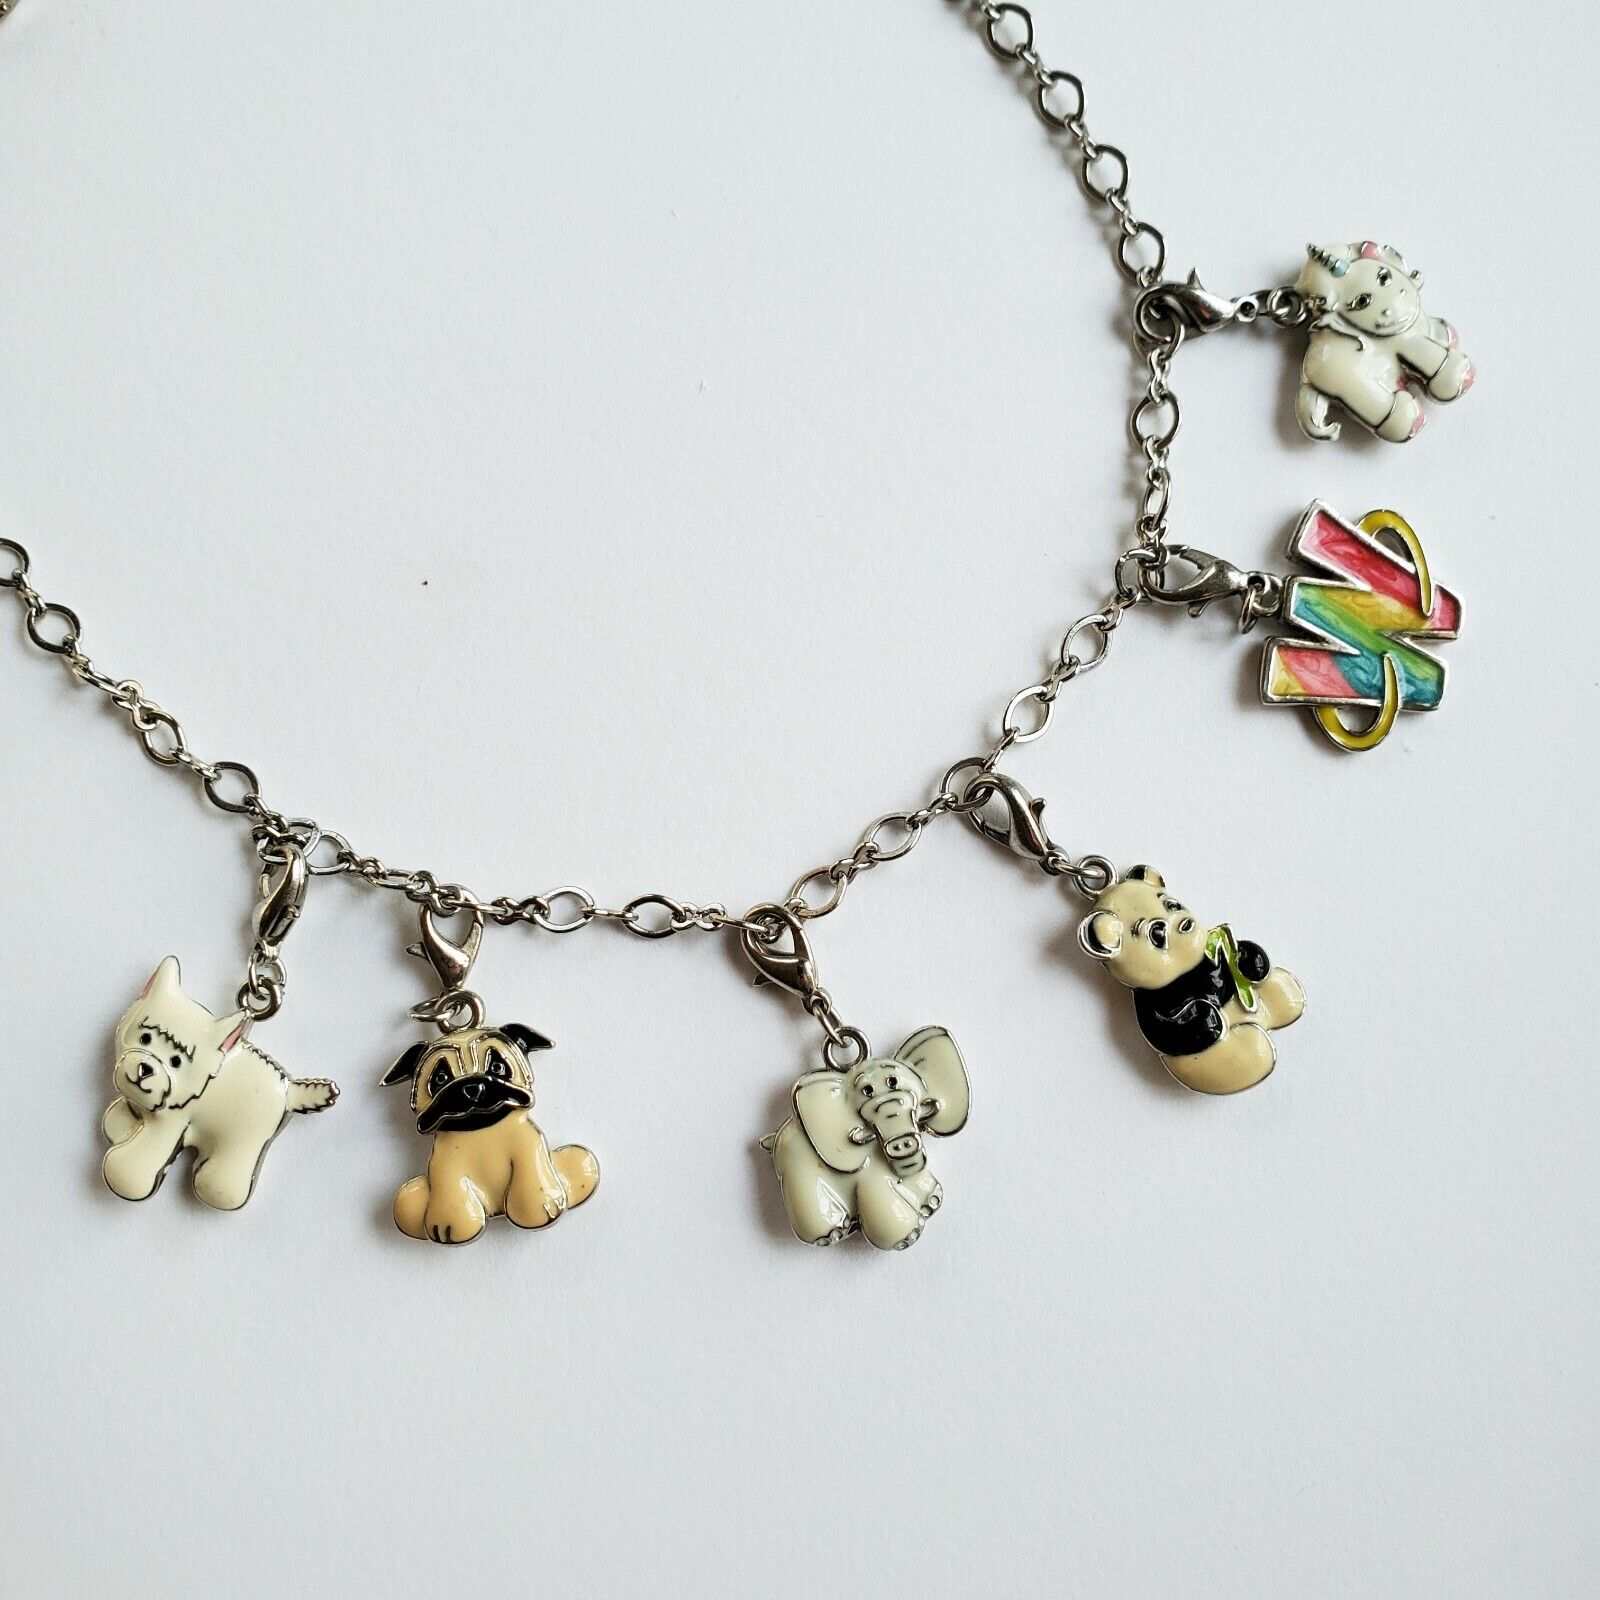 Webkinz Collectable Necklace Six Charms - Dogs Panda Unicorn Elephant  W